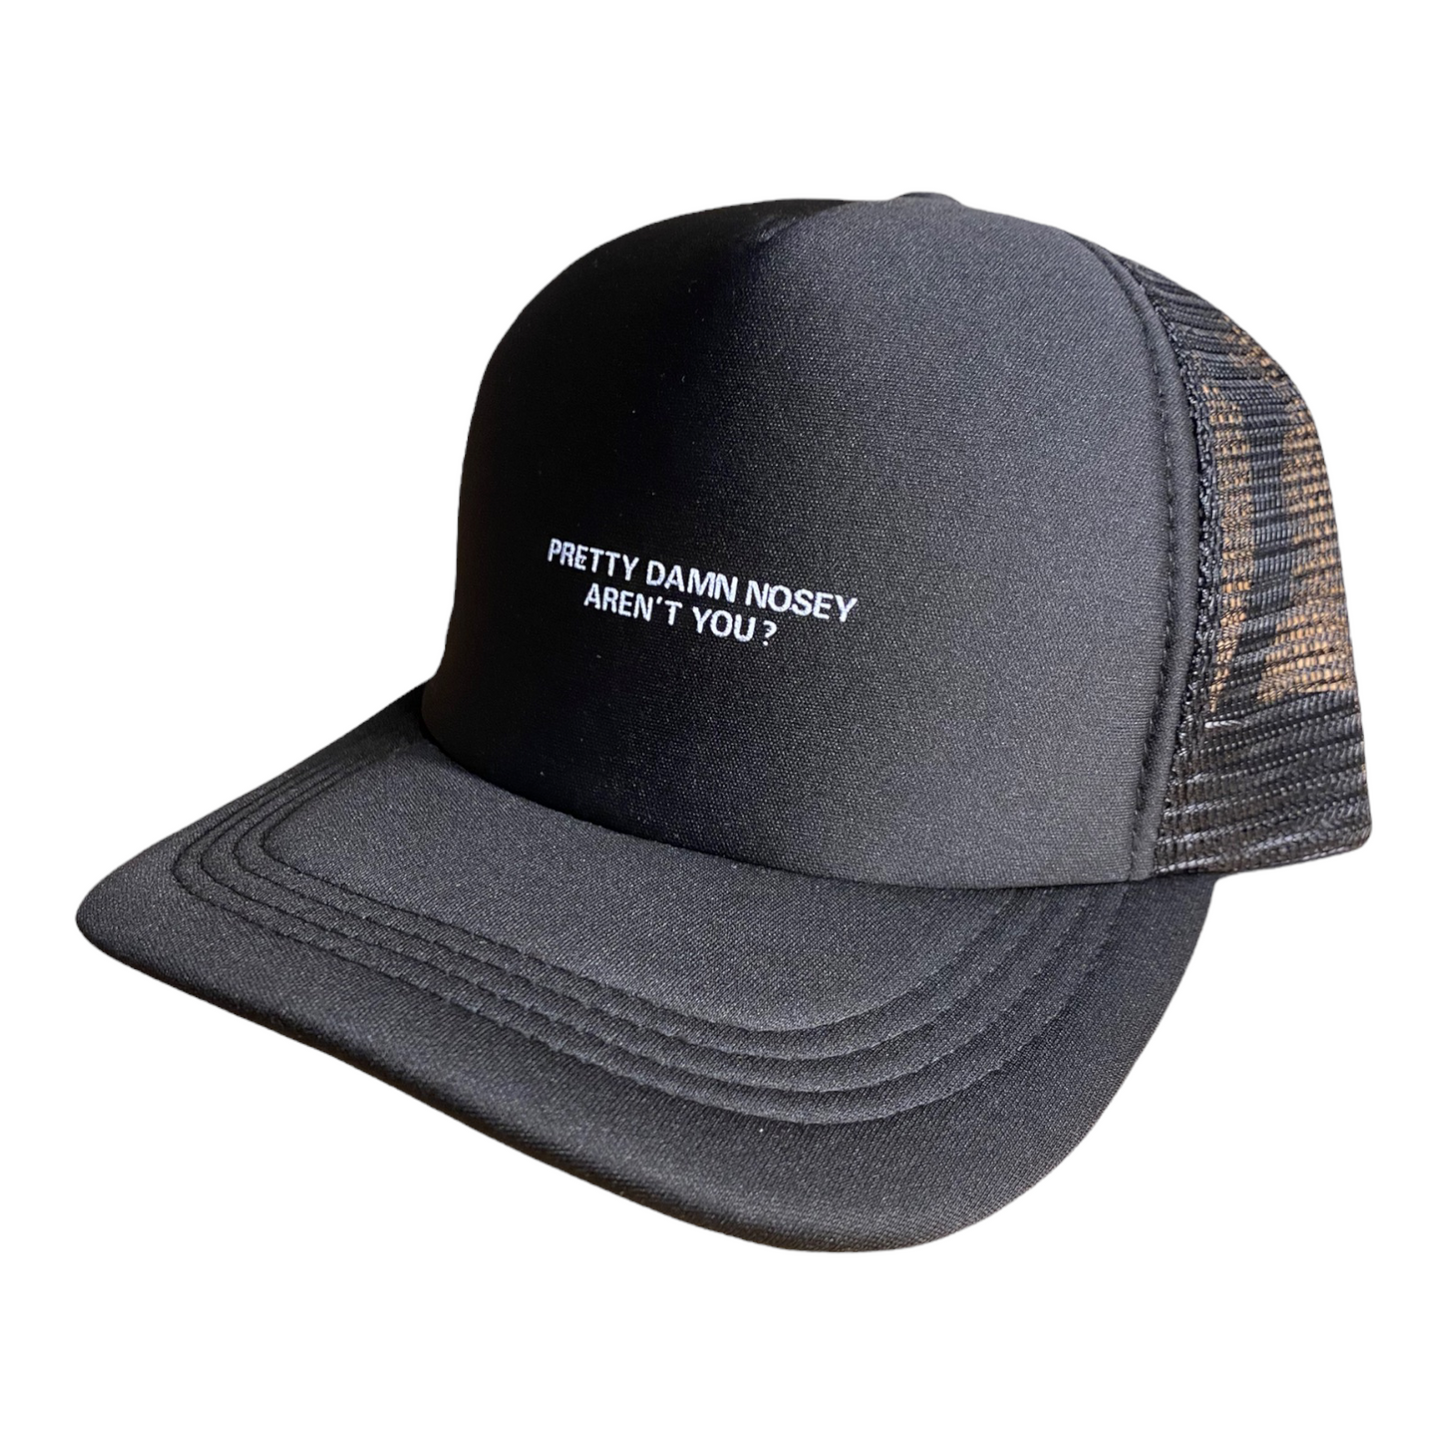 Pretty Damn Nosey Aren't You Trucker Hat Funny Trucker Hat Black